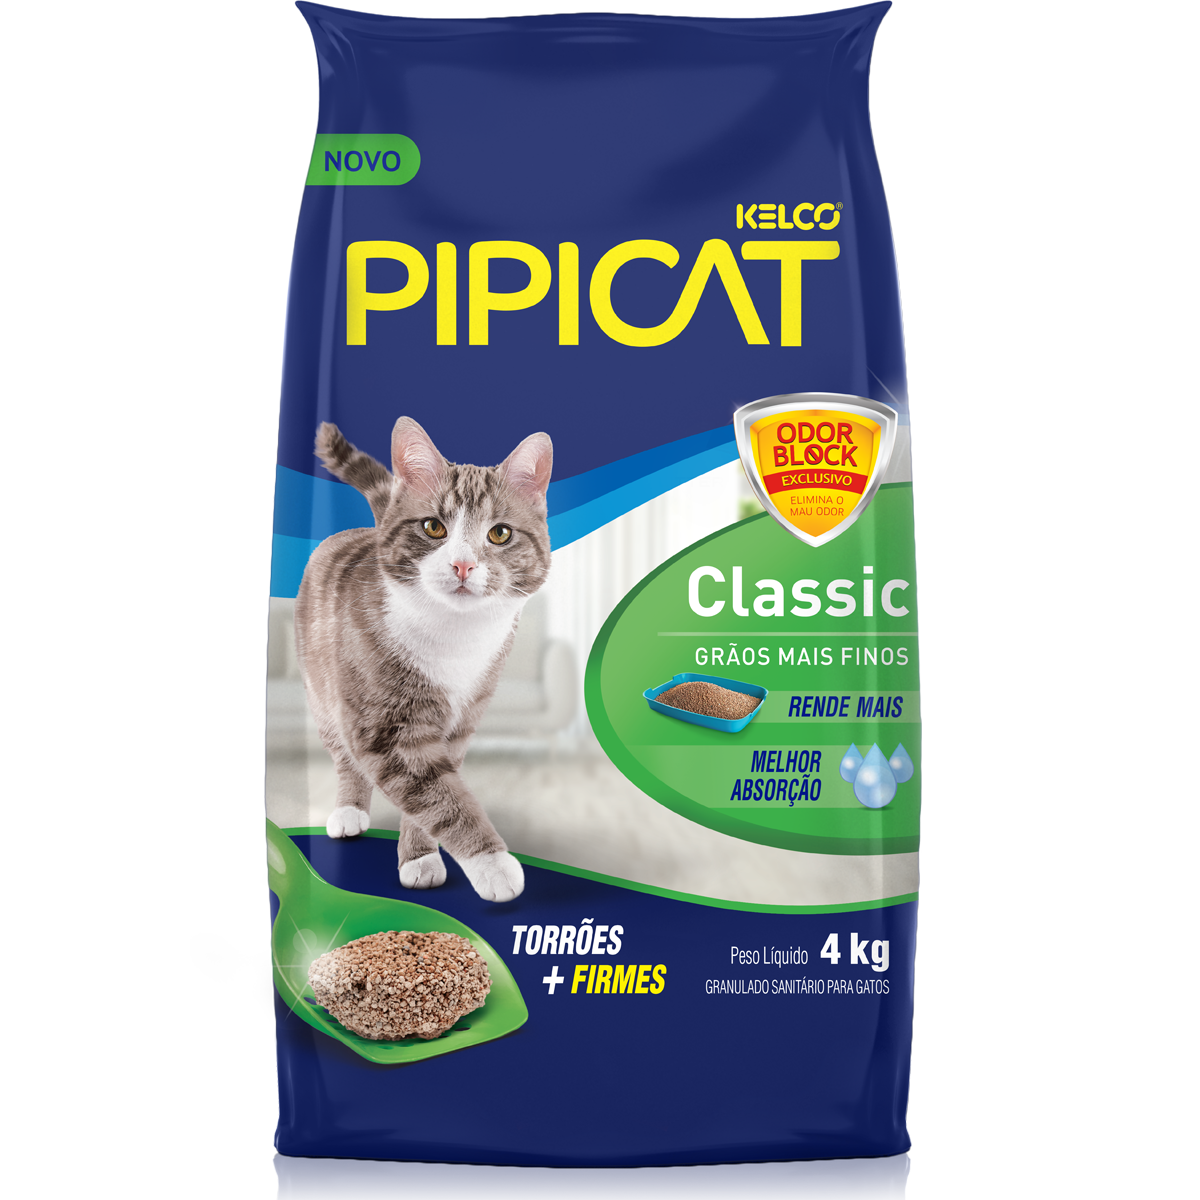 Pipicat Classic Odor Block 4kg